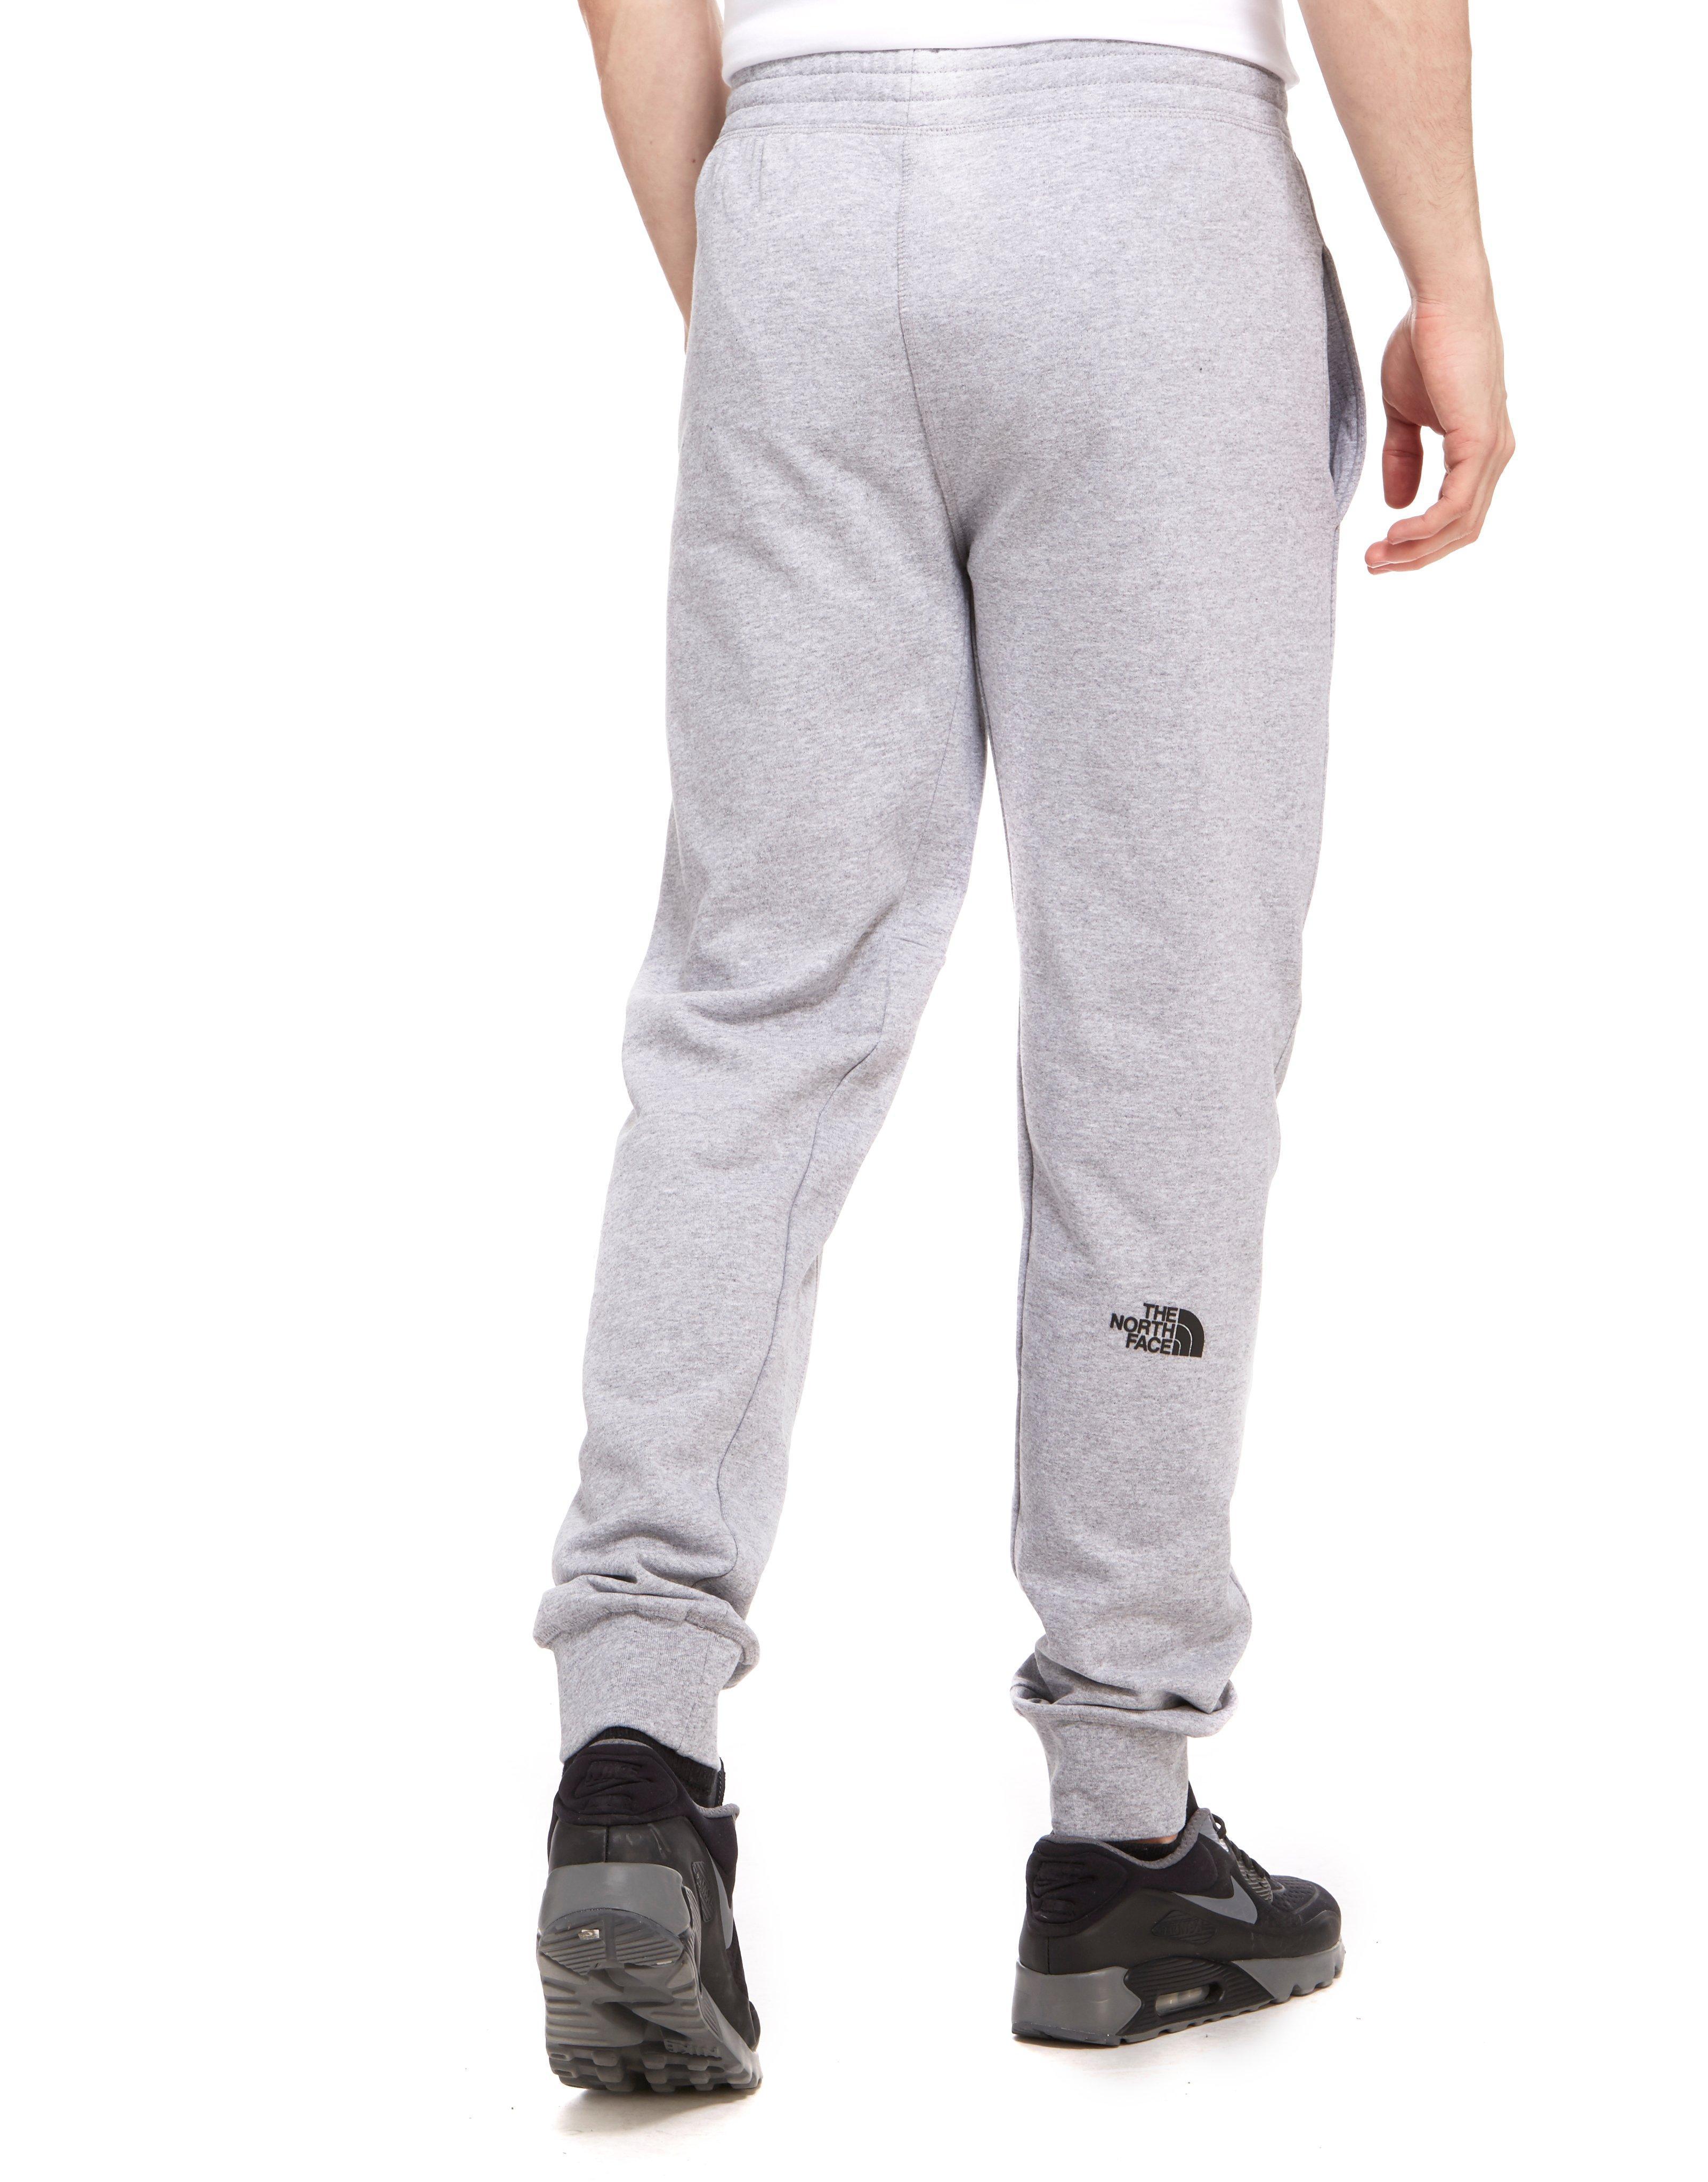 The North Face Bondi Fleece Pants in Grey/Black (Gray) for Men - Lyst